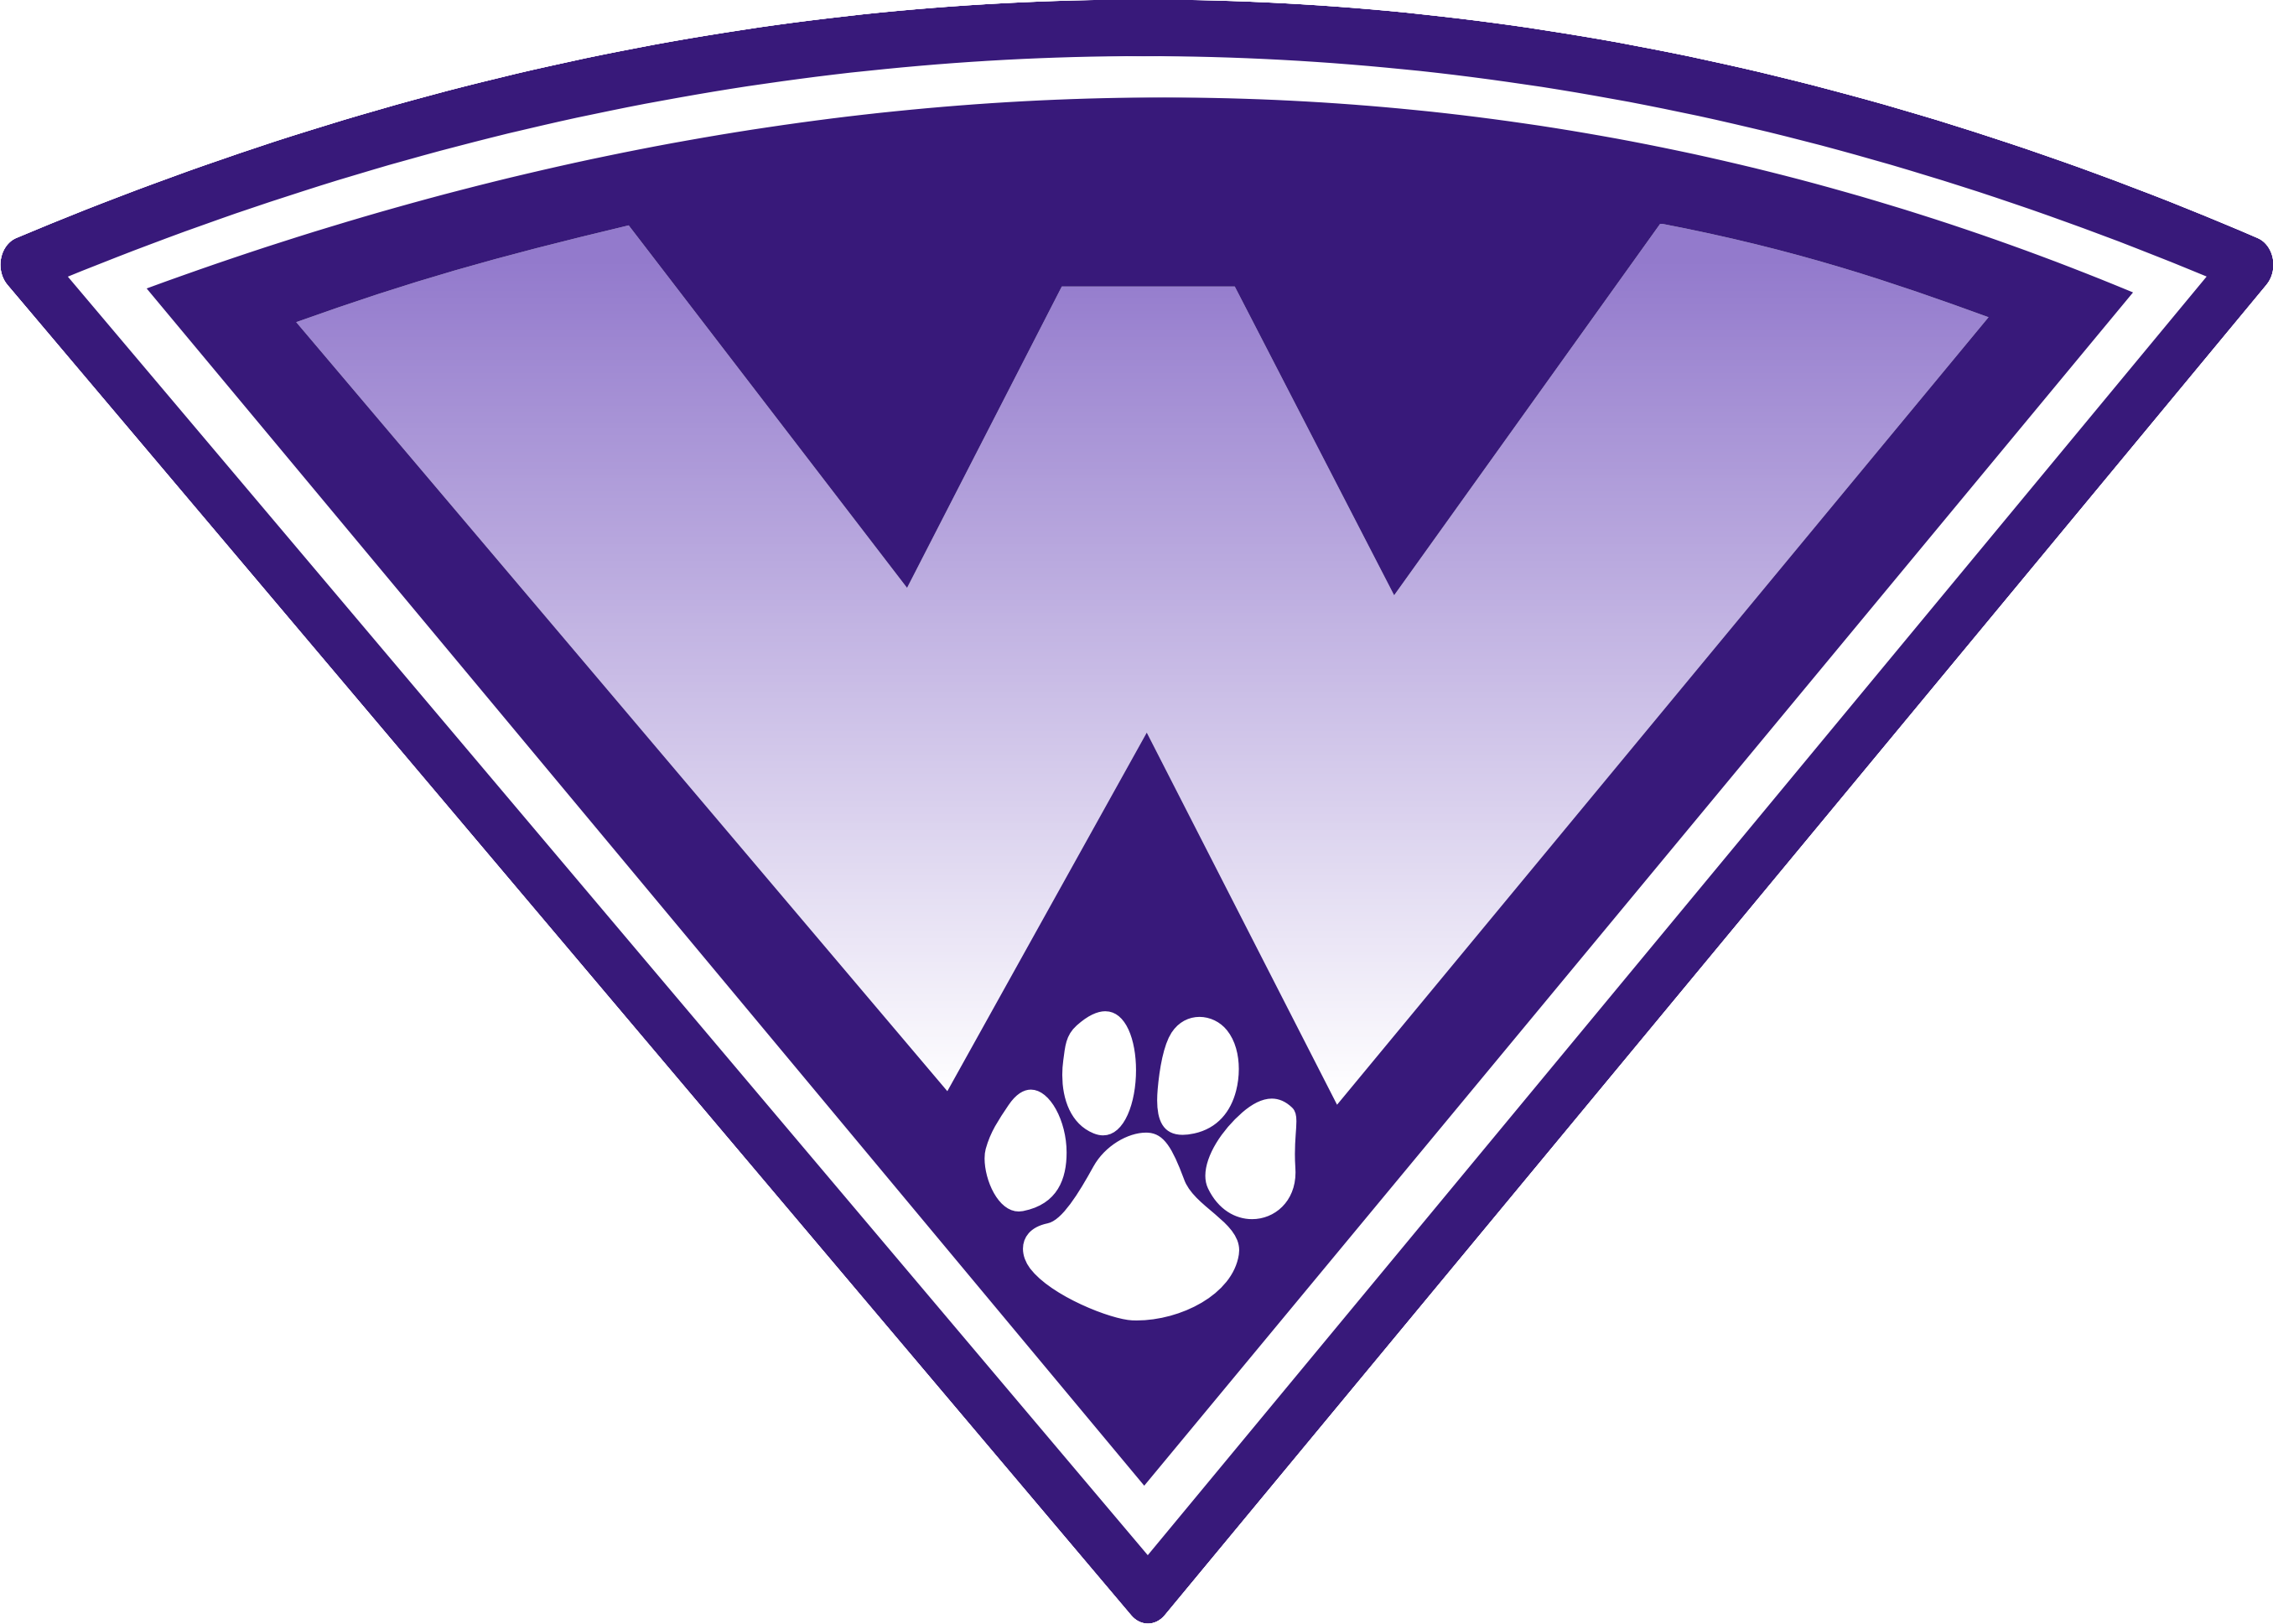 Warriors emblem logo symbol. Warrior clipart golden state